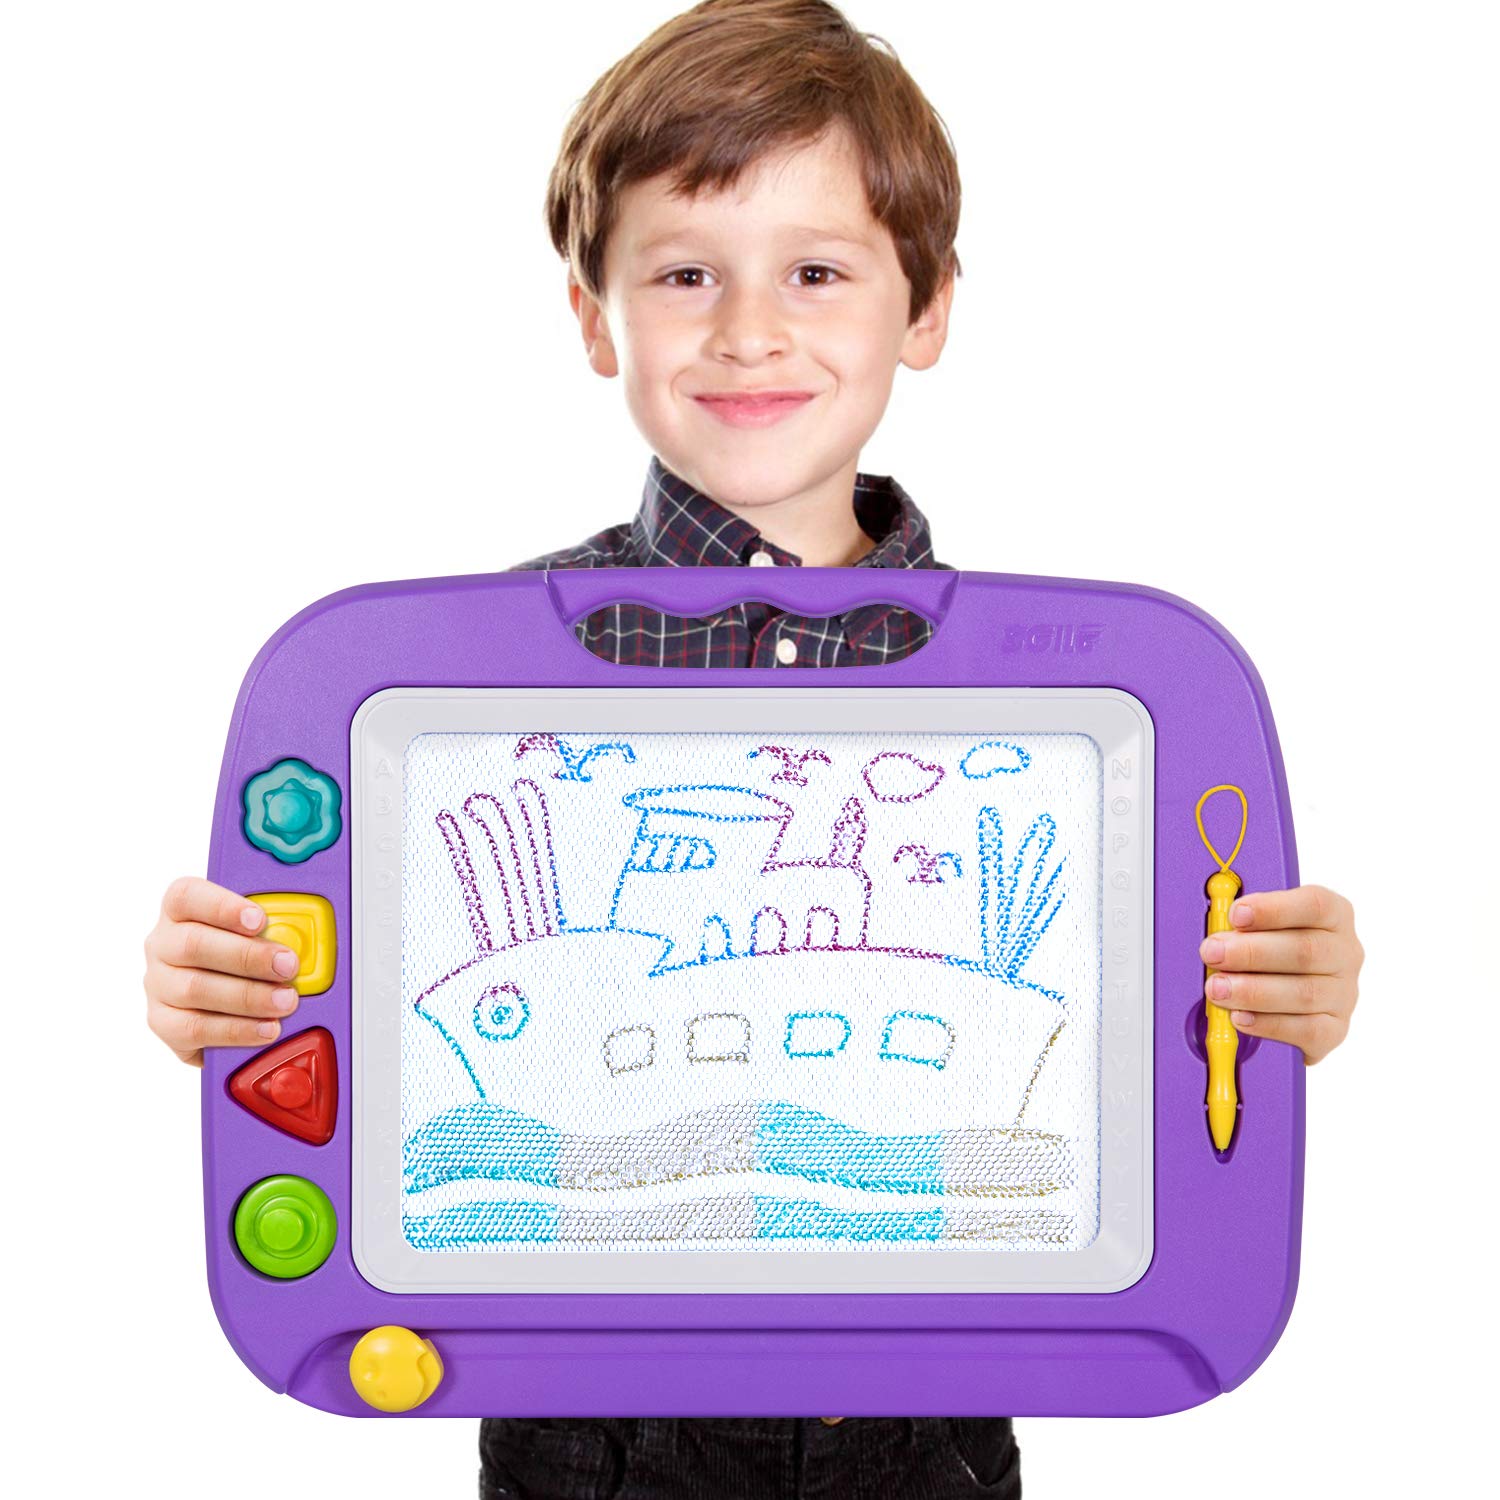 SGILE Large Magnetic Doodle Board, Magnetic Erasable Drawing Pad Gift for Kids Toddler (Purple)